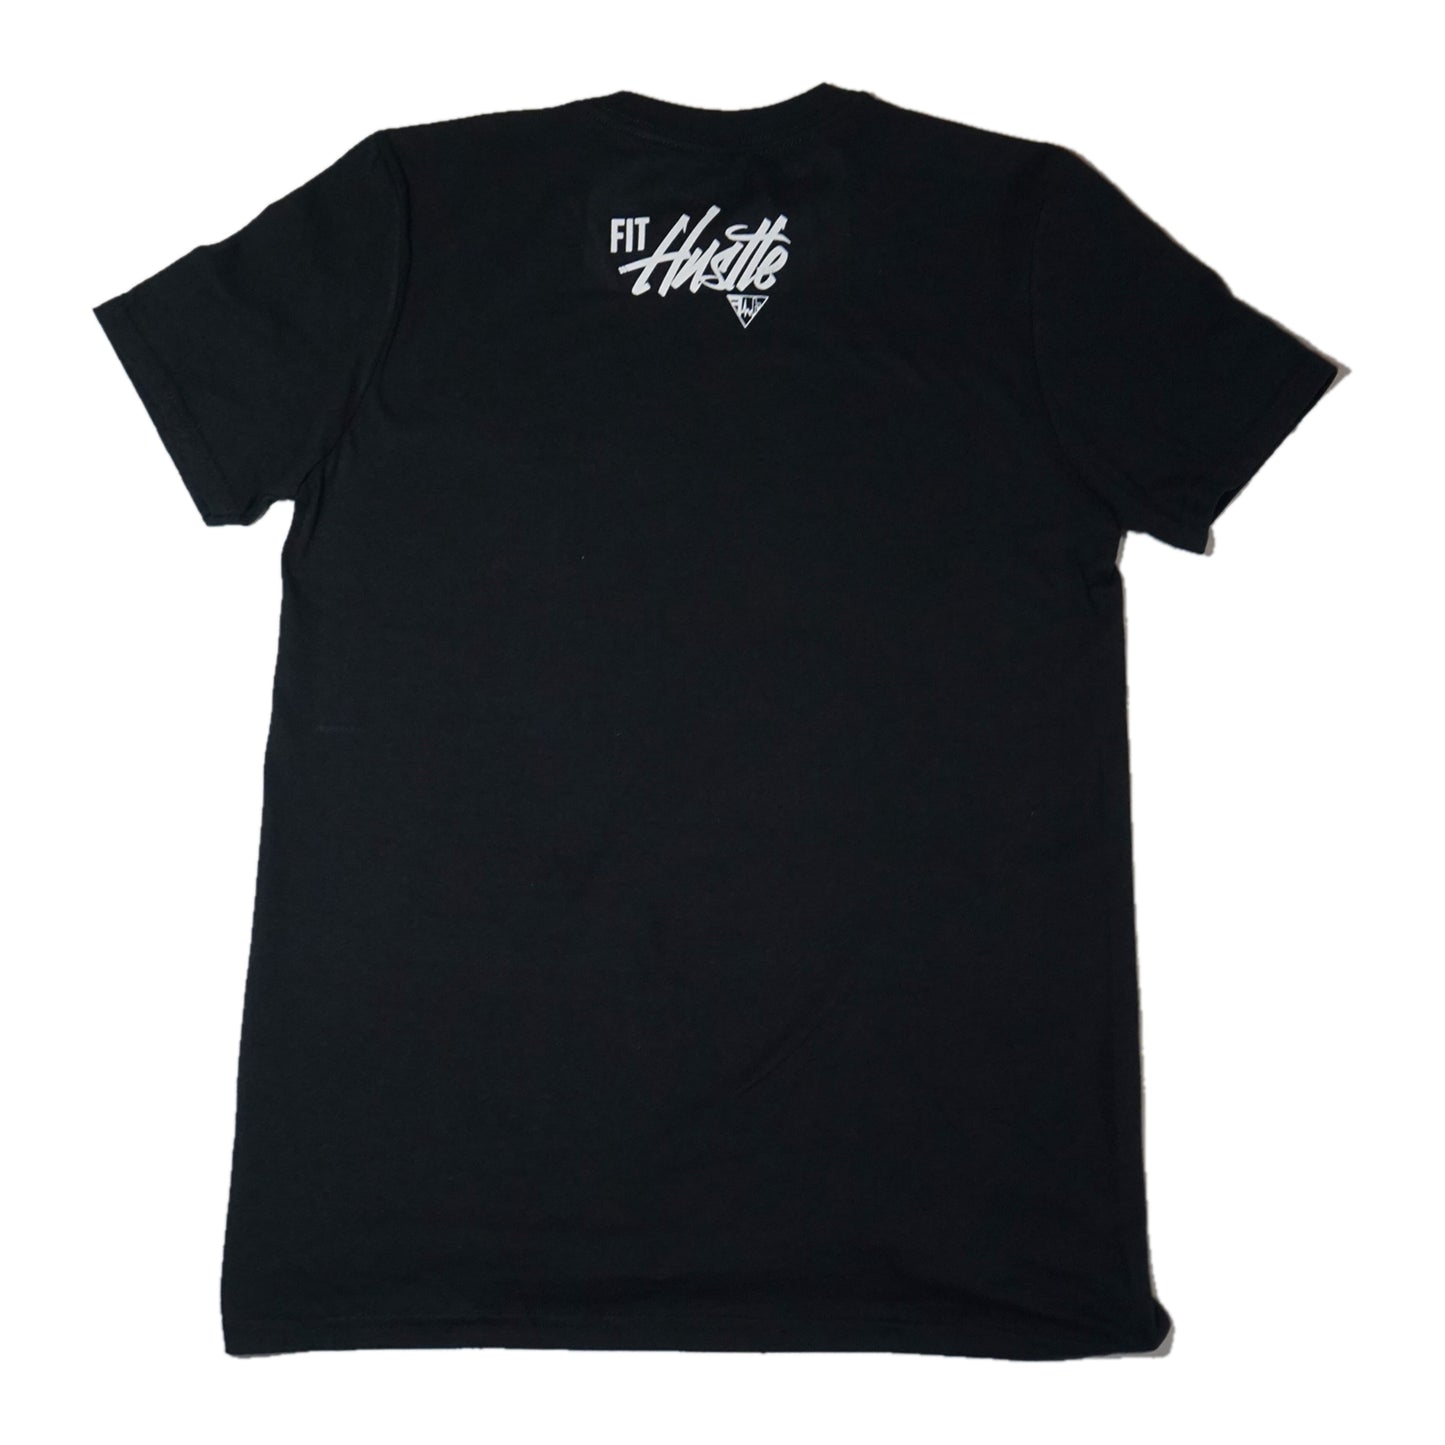 "Live the Hustle" Black/Teal T-Shirt